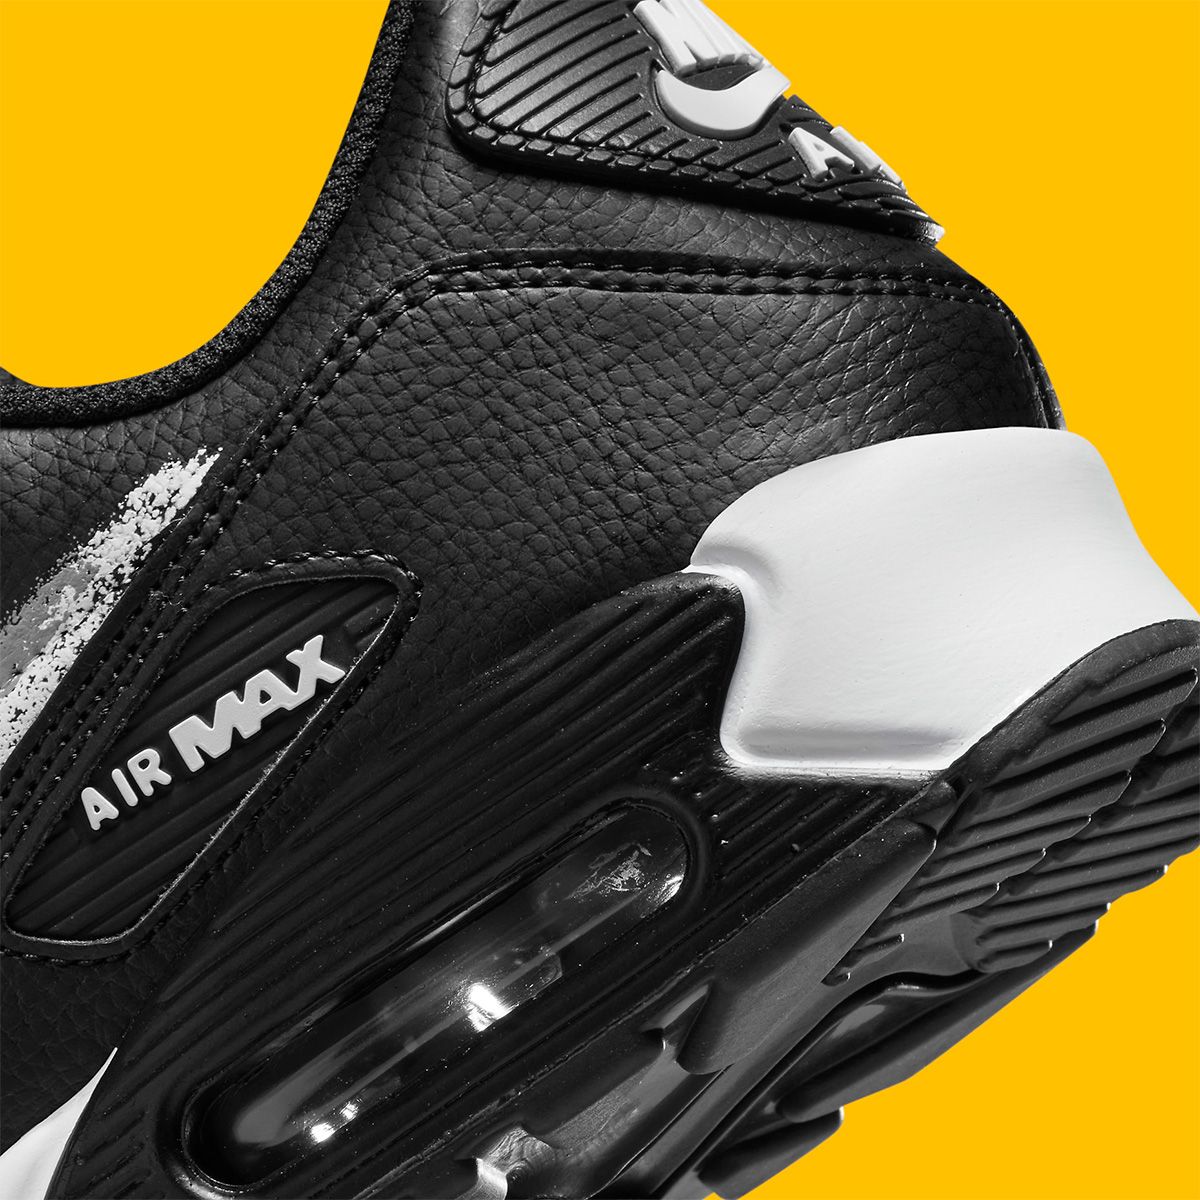 First Looks // Nike Air Max 90 